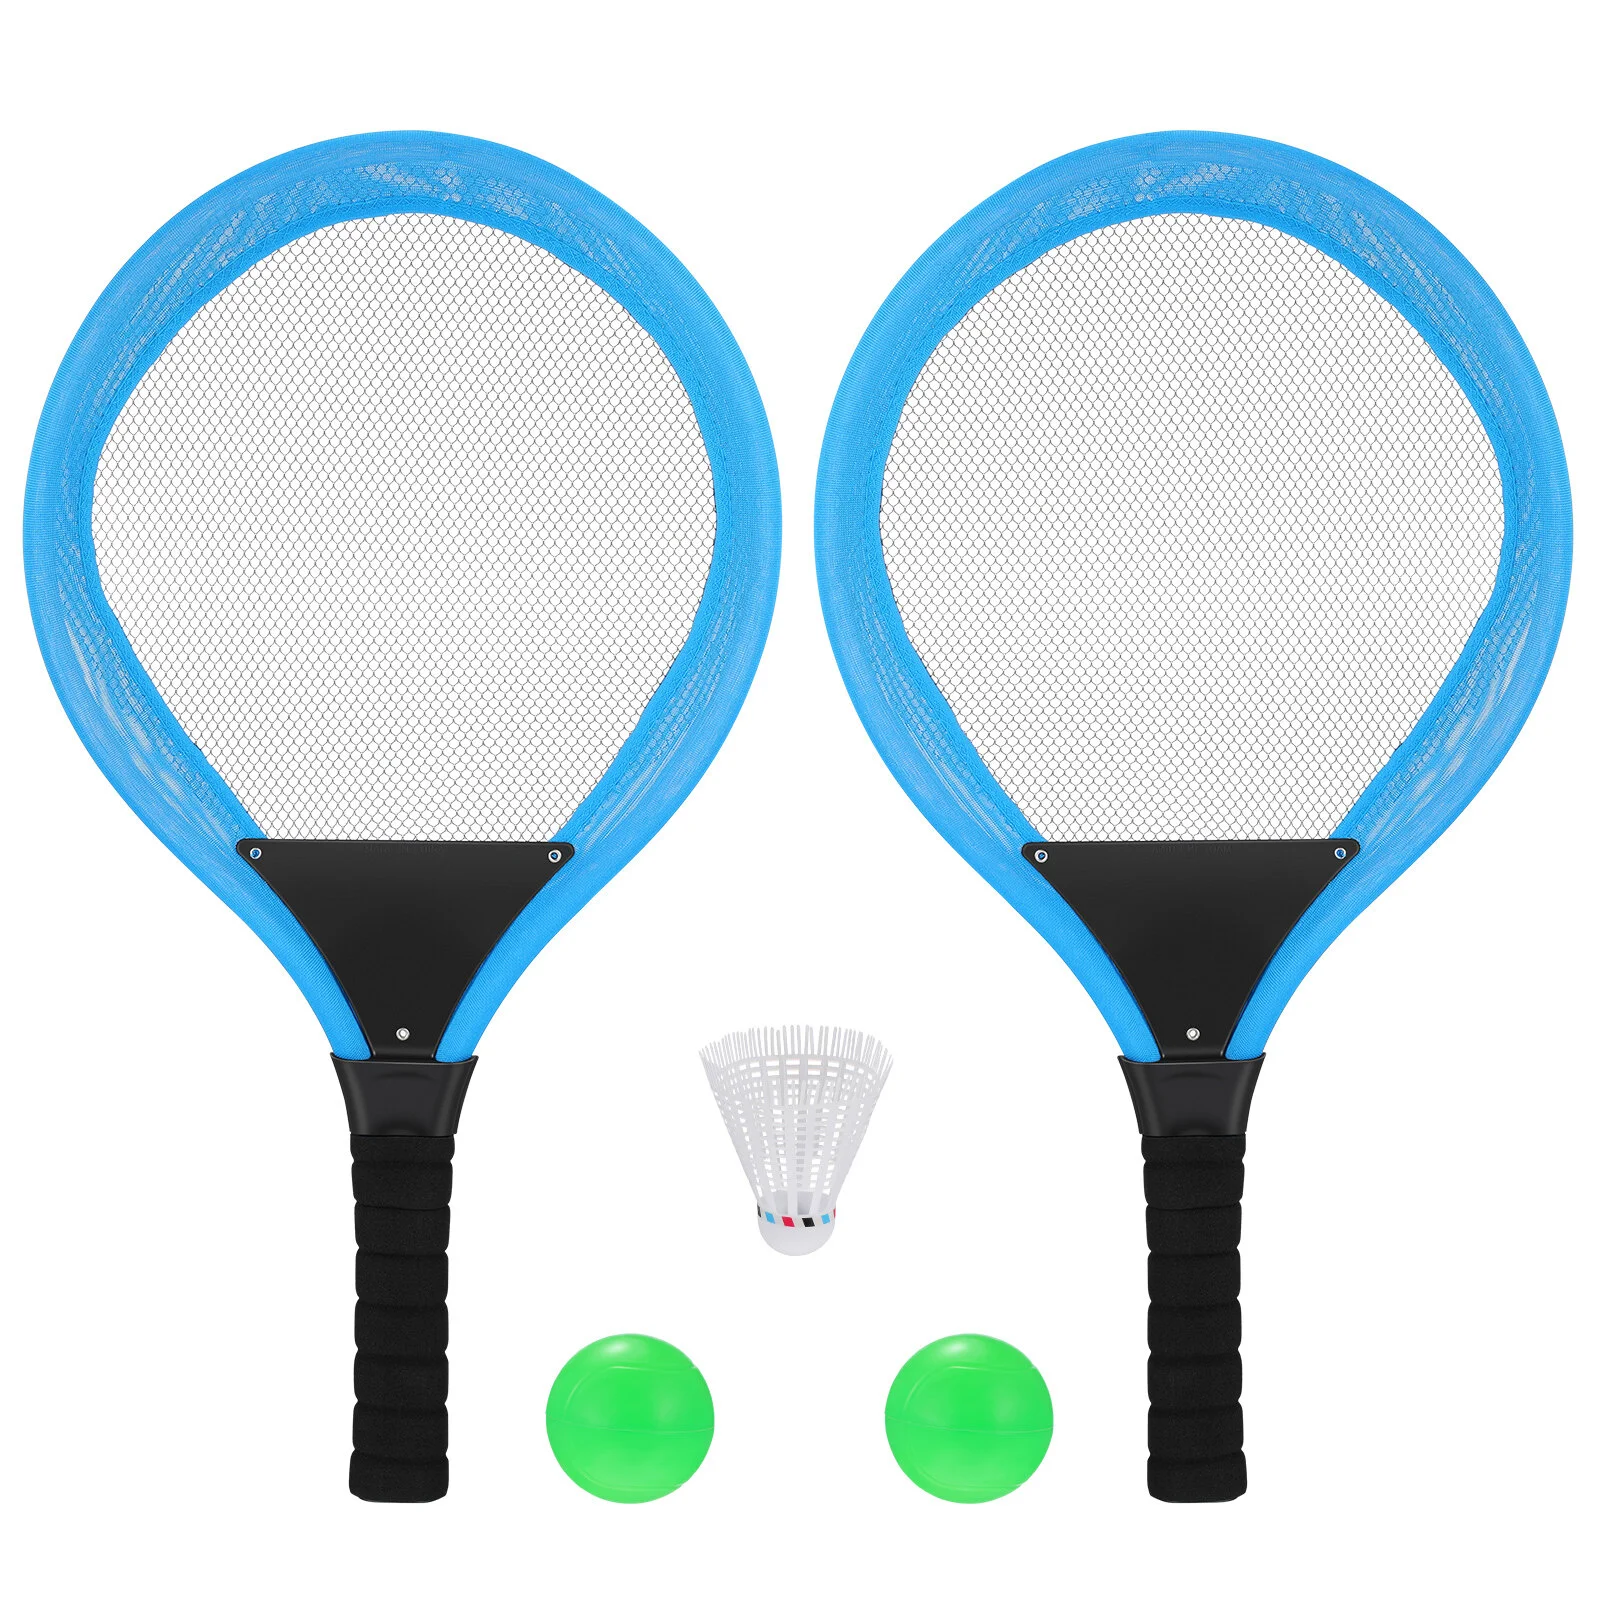 

TOYMYTOY 1 Set Badminton Racket Tennis Set Tennis Rackets Balls Badminton Kit Outdoor Sports for Kids